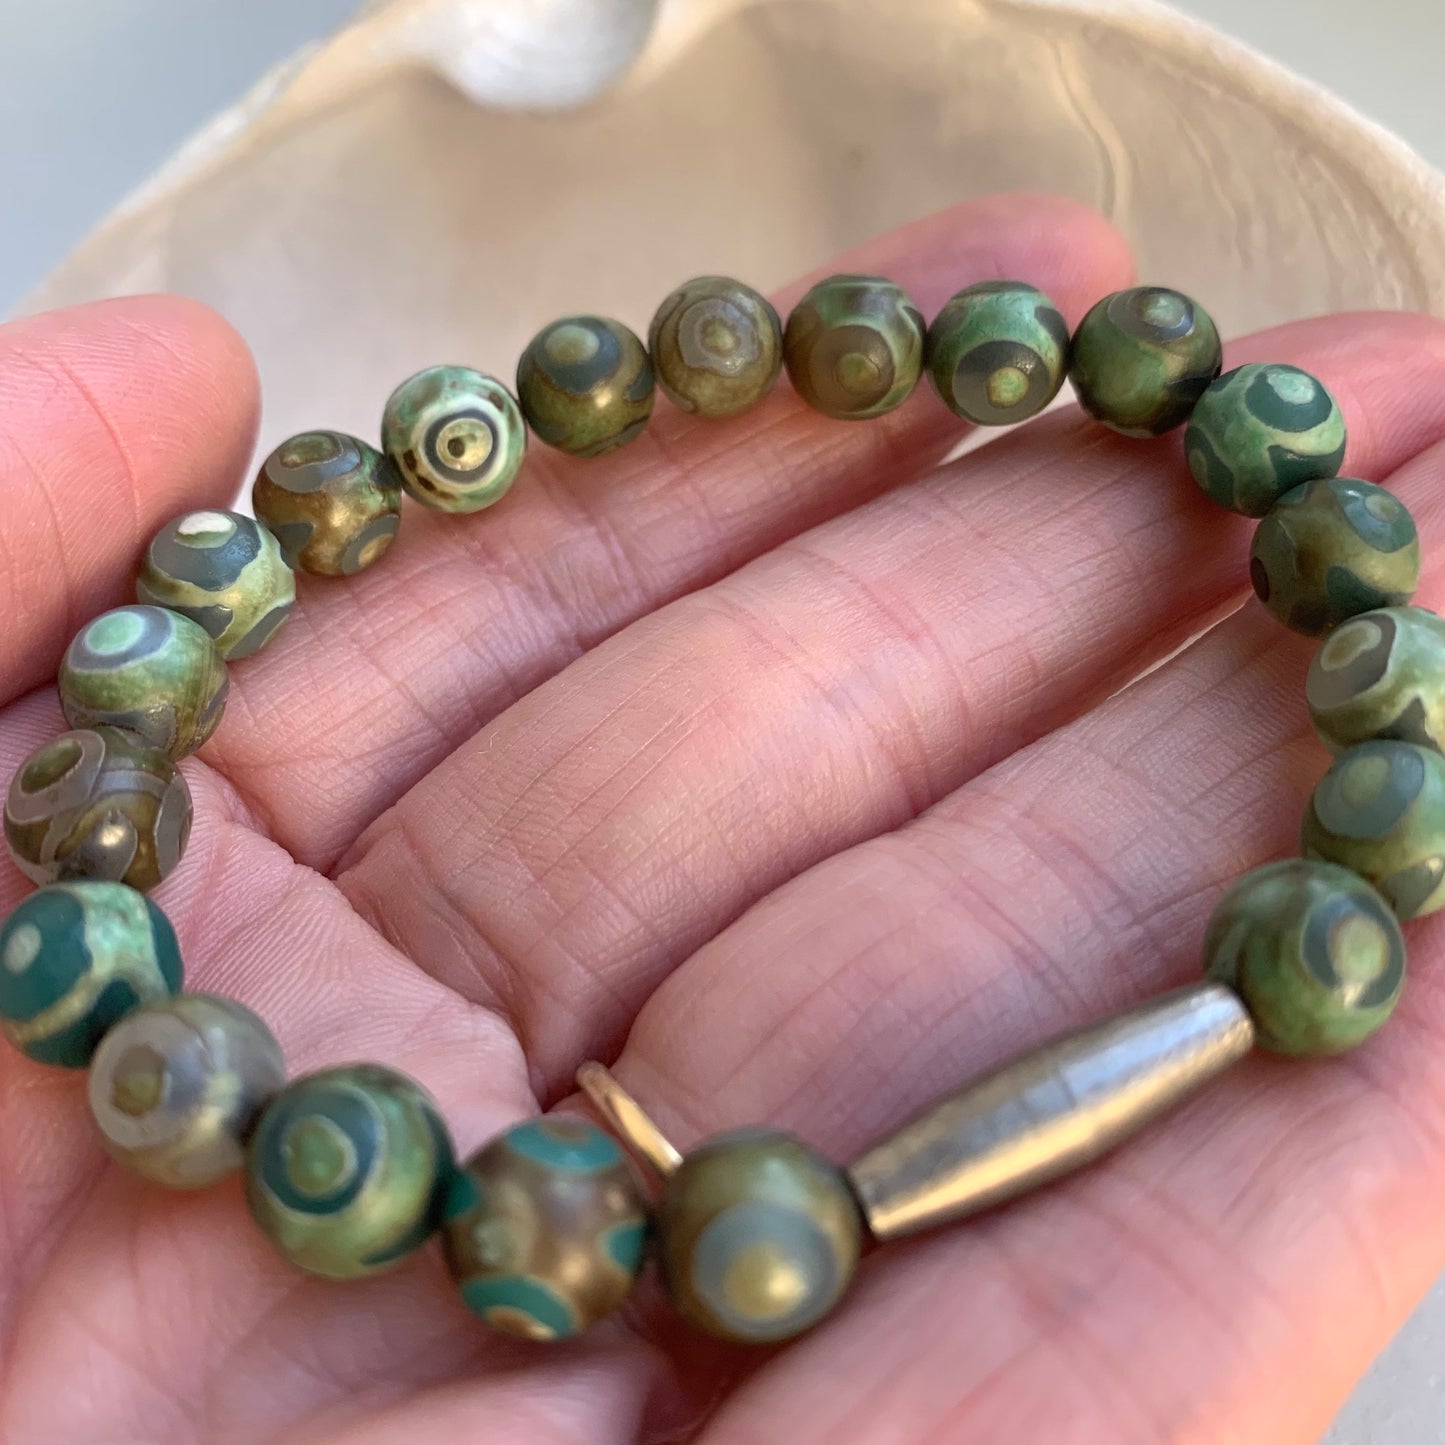 Jasper bracelet - beaded stretchy bracelet in greens and silver - yoga jewelry - mala meditation - spiritual accessory - gifts for yogis